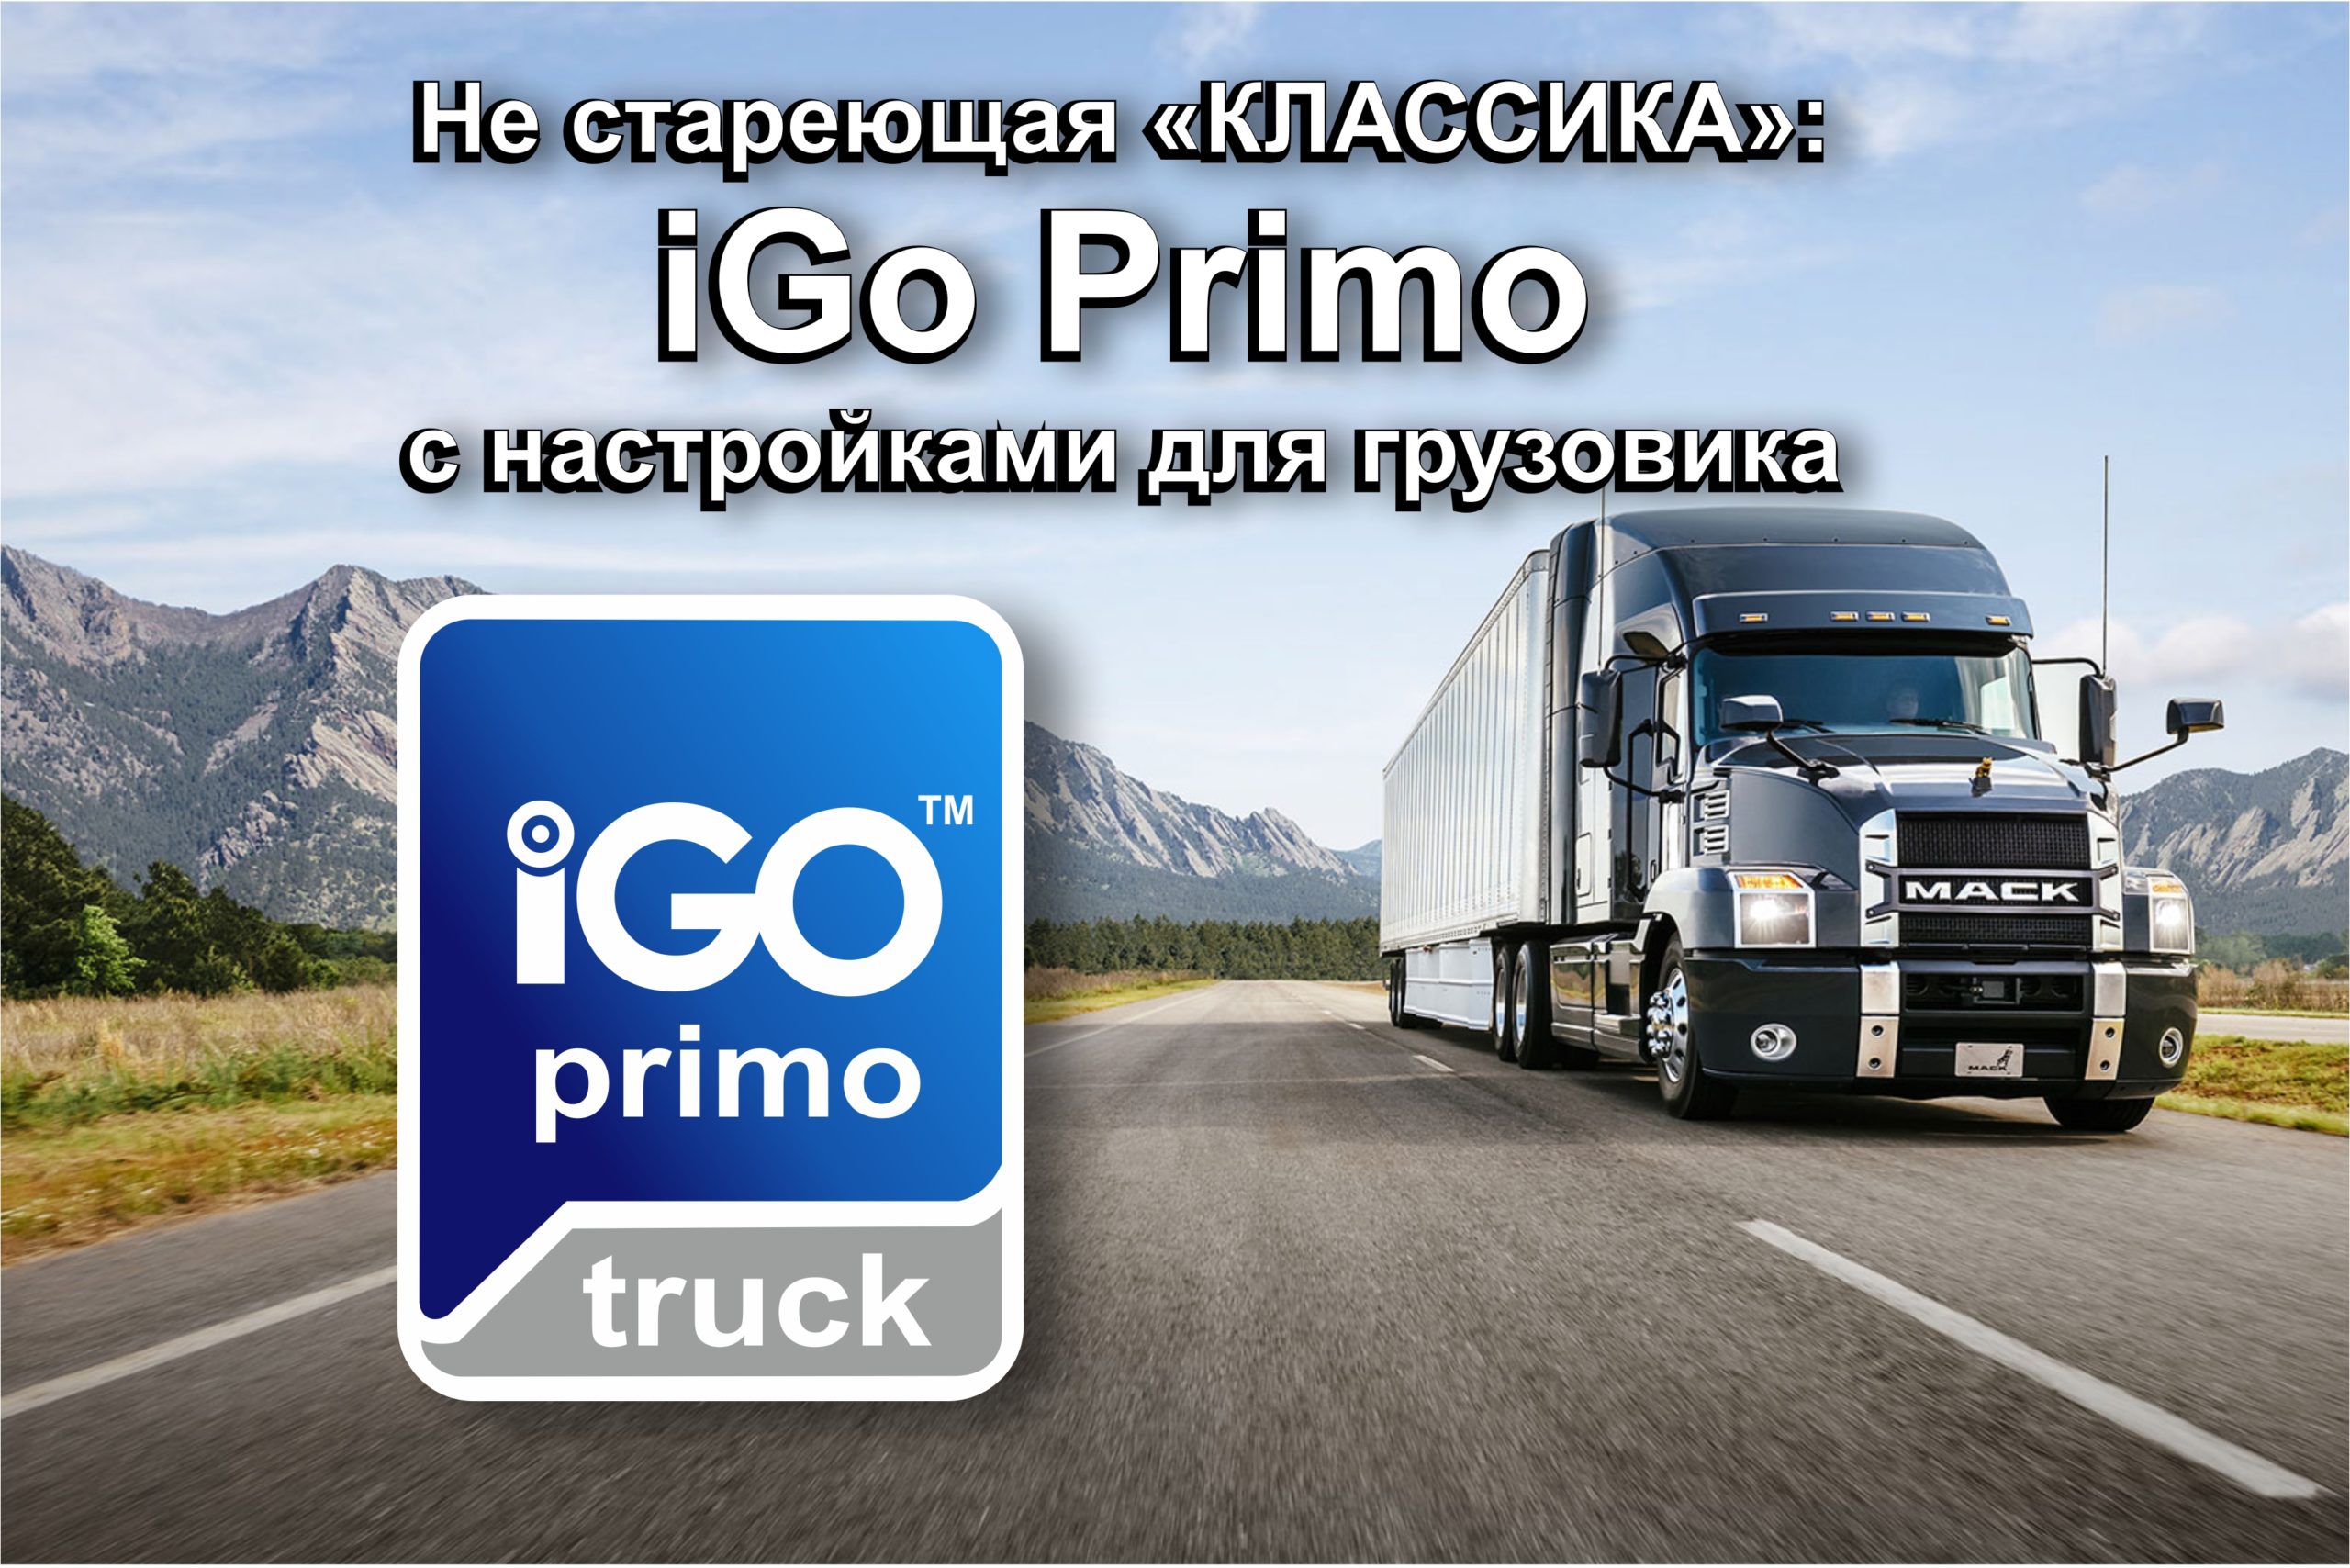 IGO primo для грузовиков. IGO primo для грузовиков на андроид. Фура леново. Грузовик самсунг.